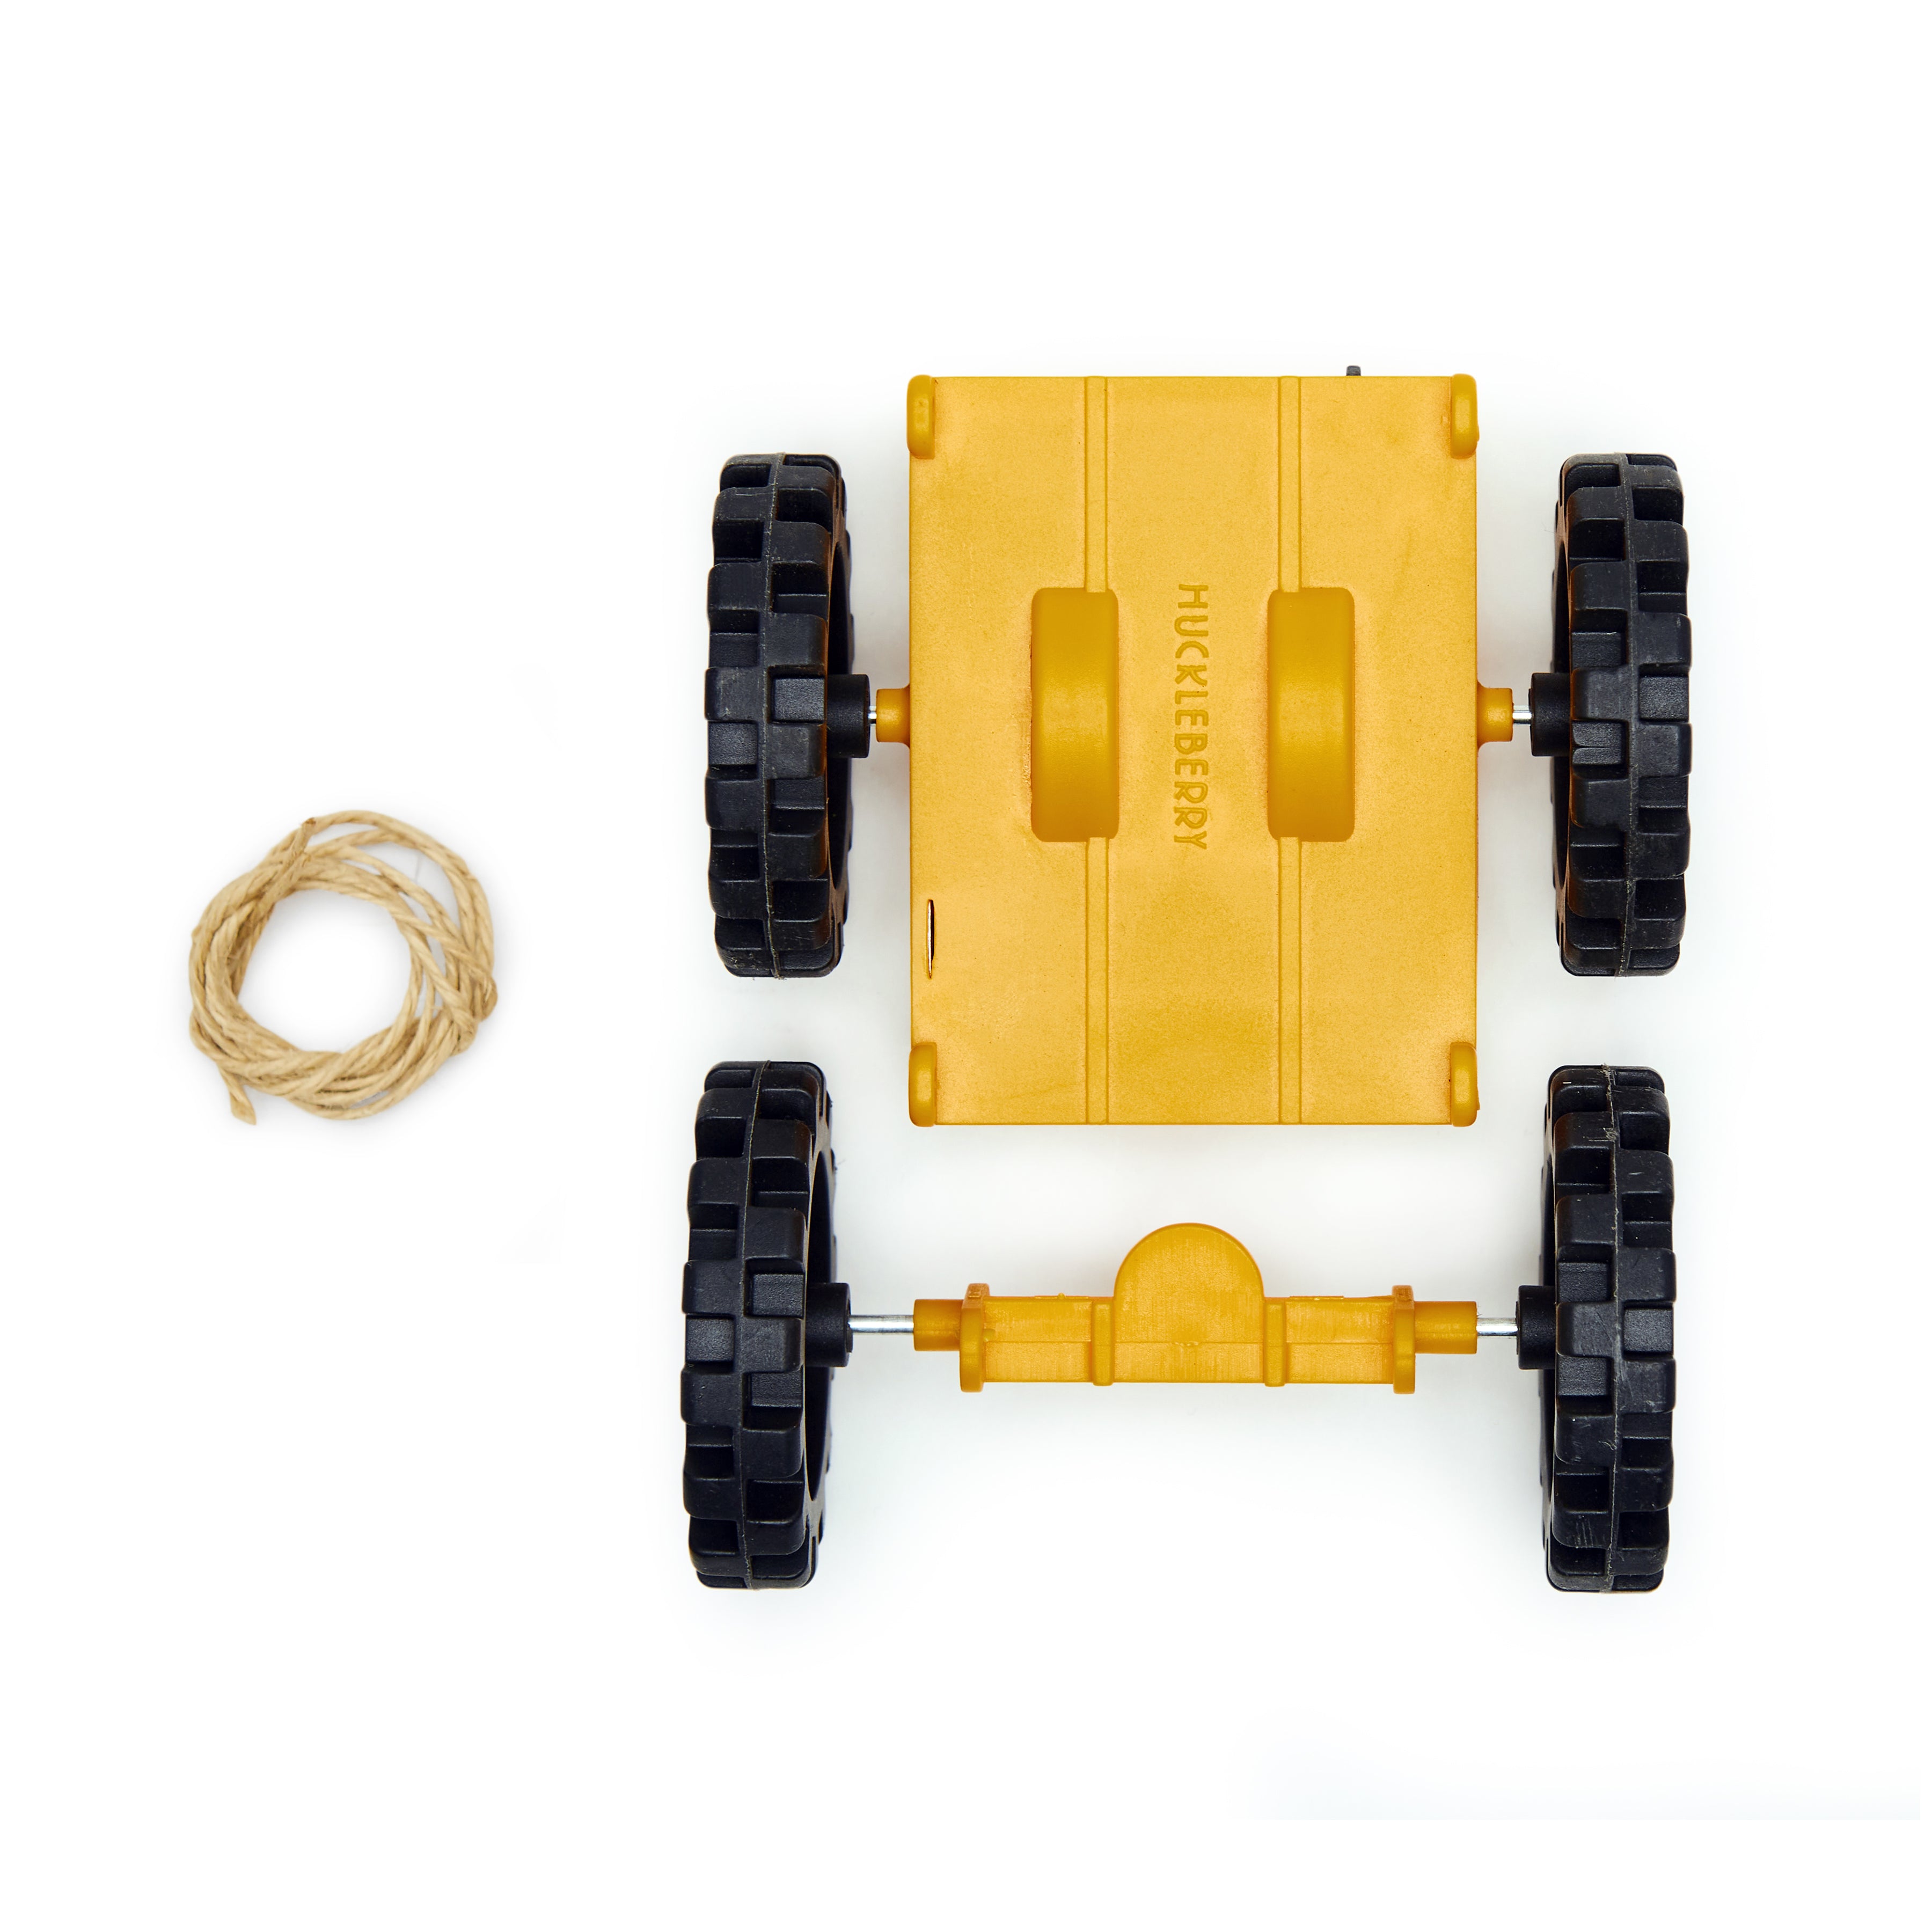 The Kit Car: DIY Vehicles - Inventionland